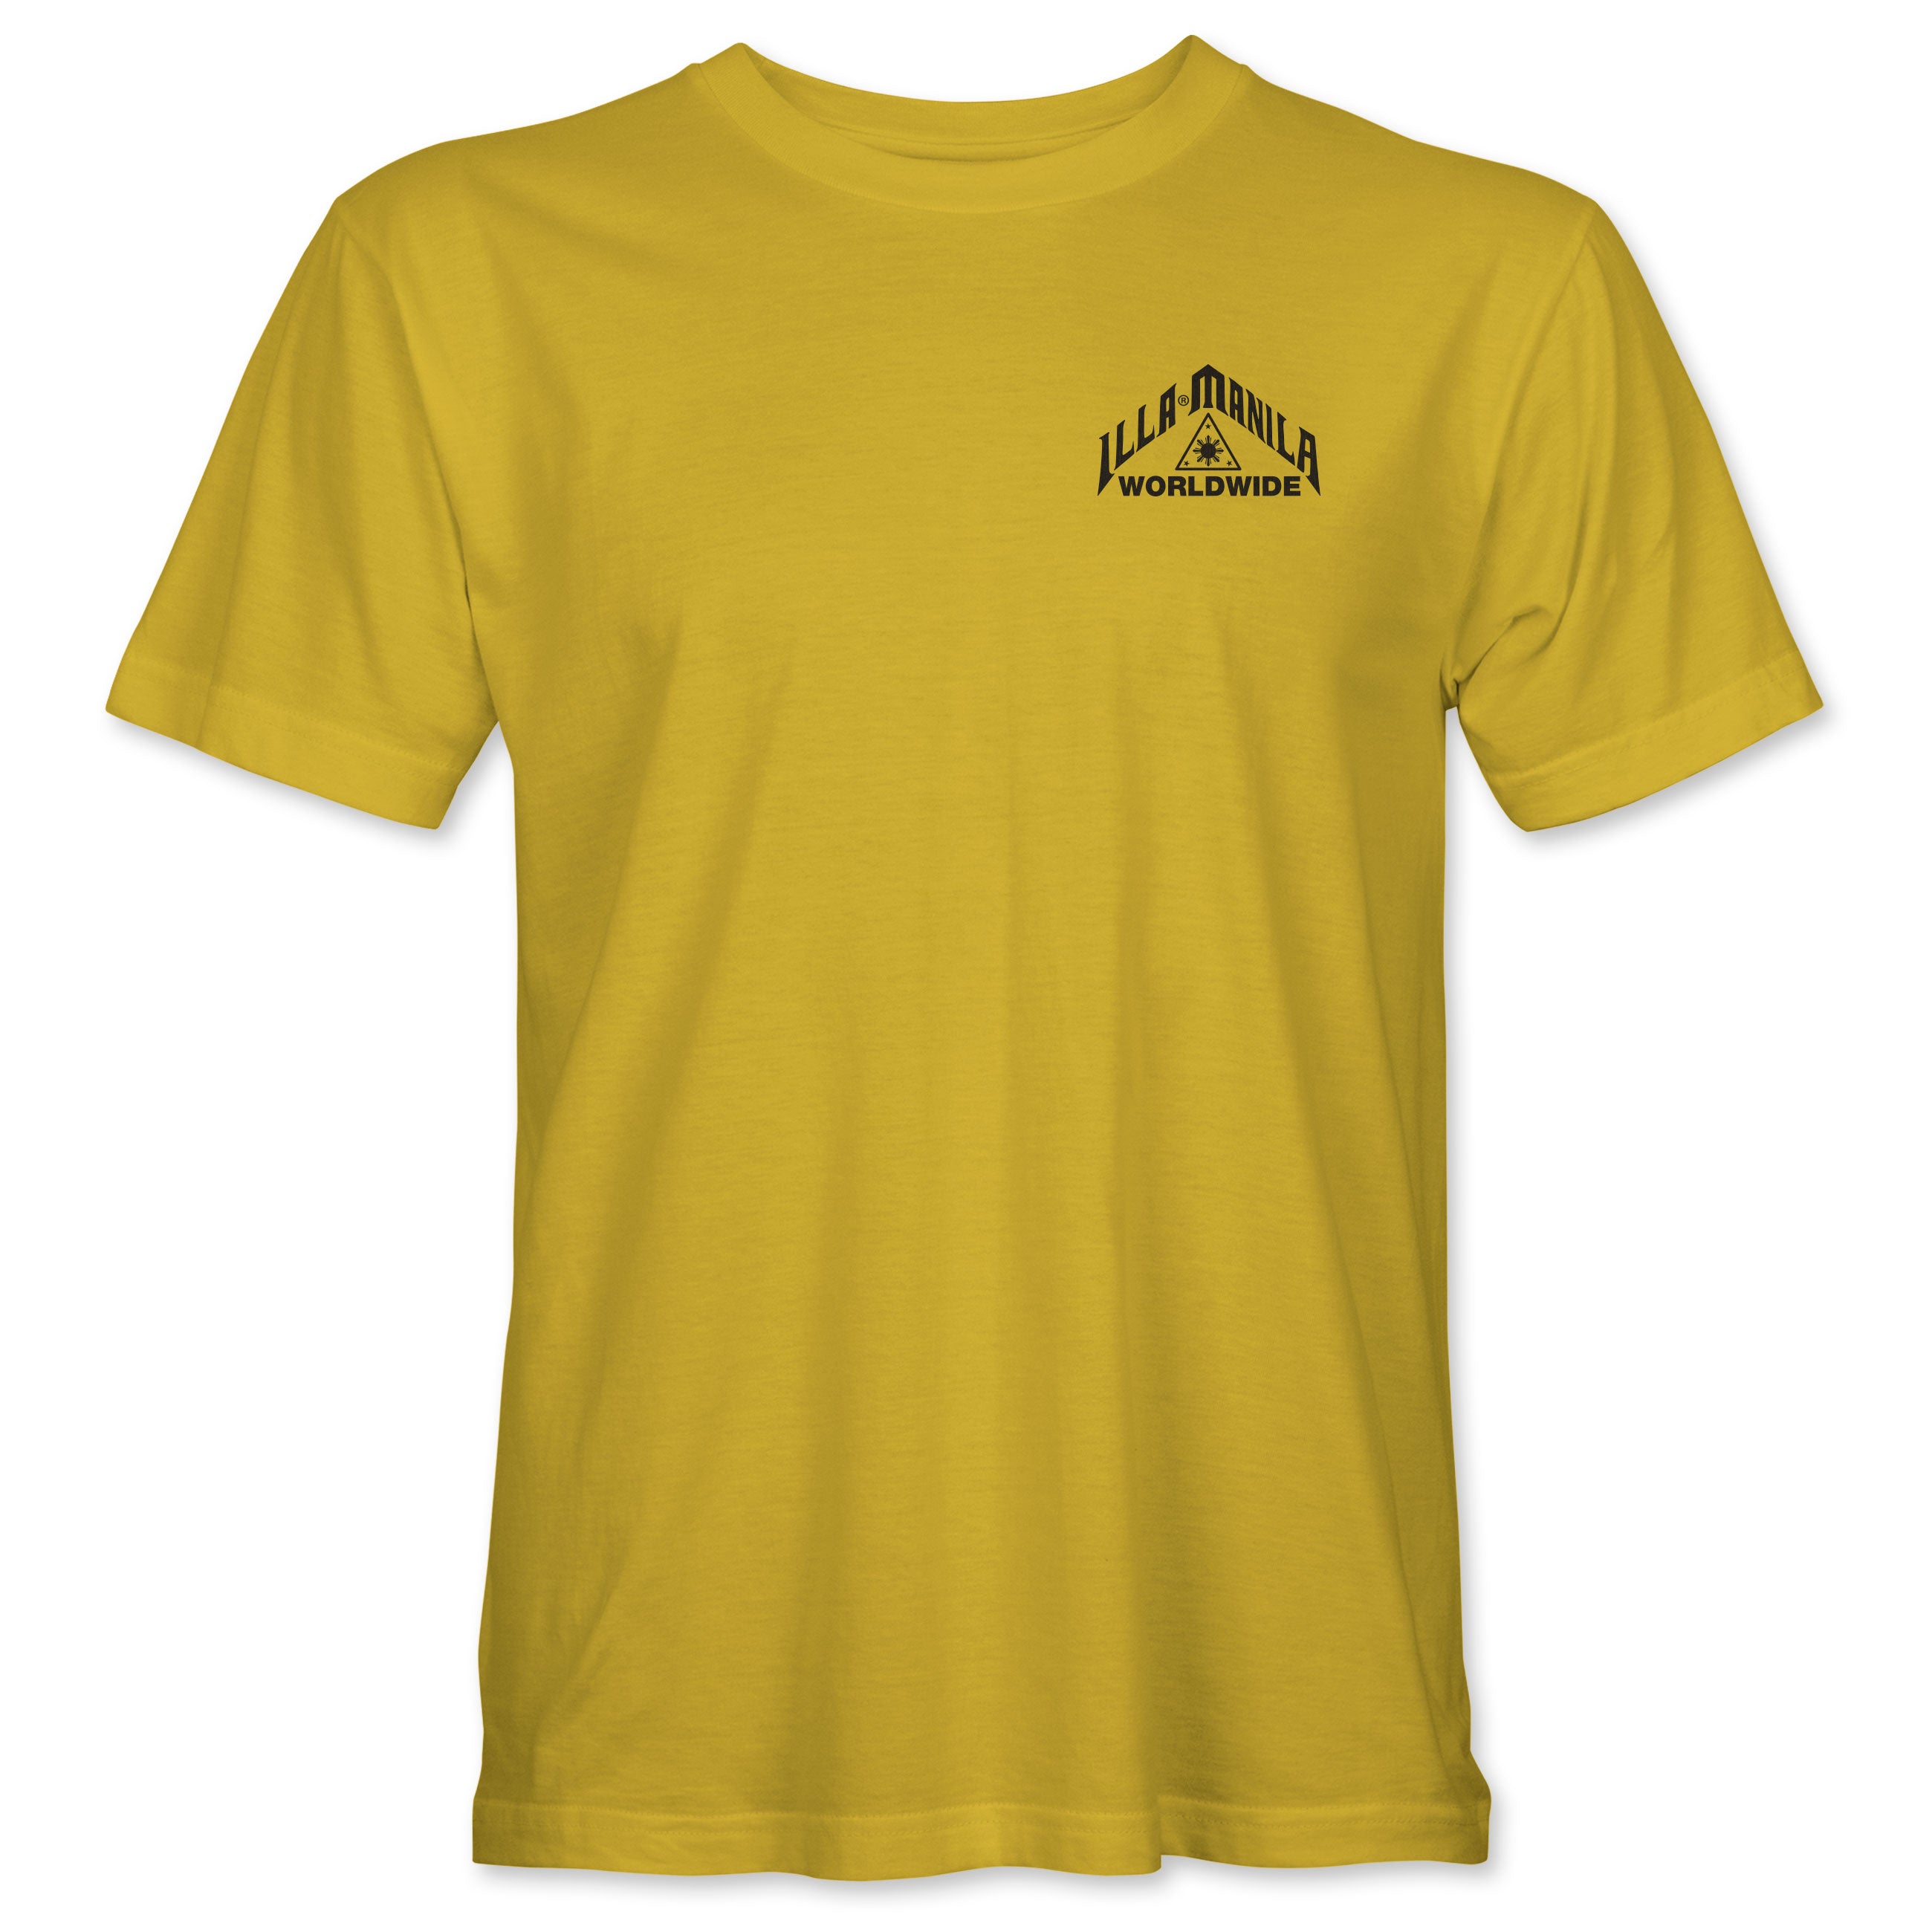 ILLA Worldwide Strength T-shirt - Yellow